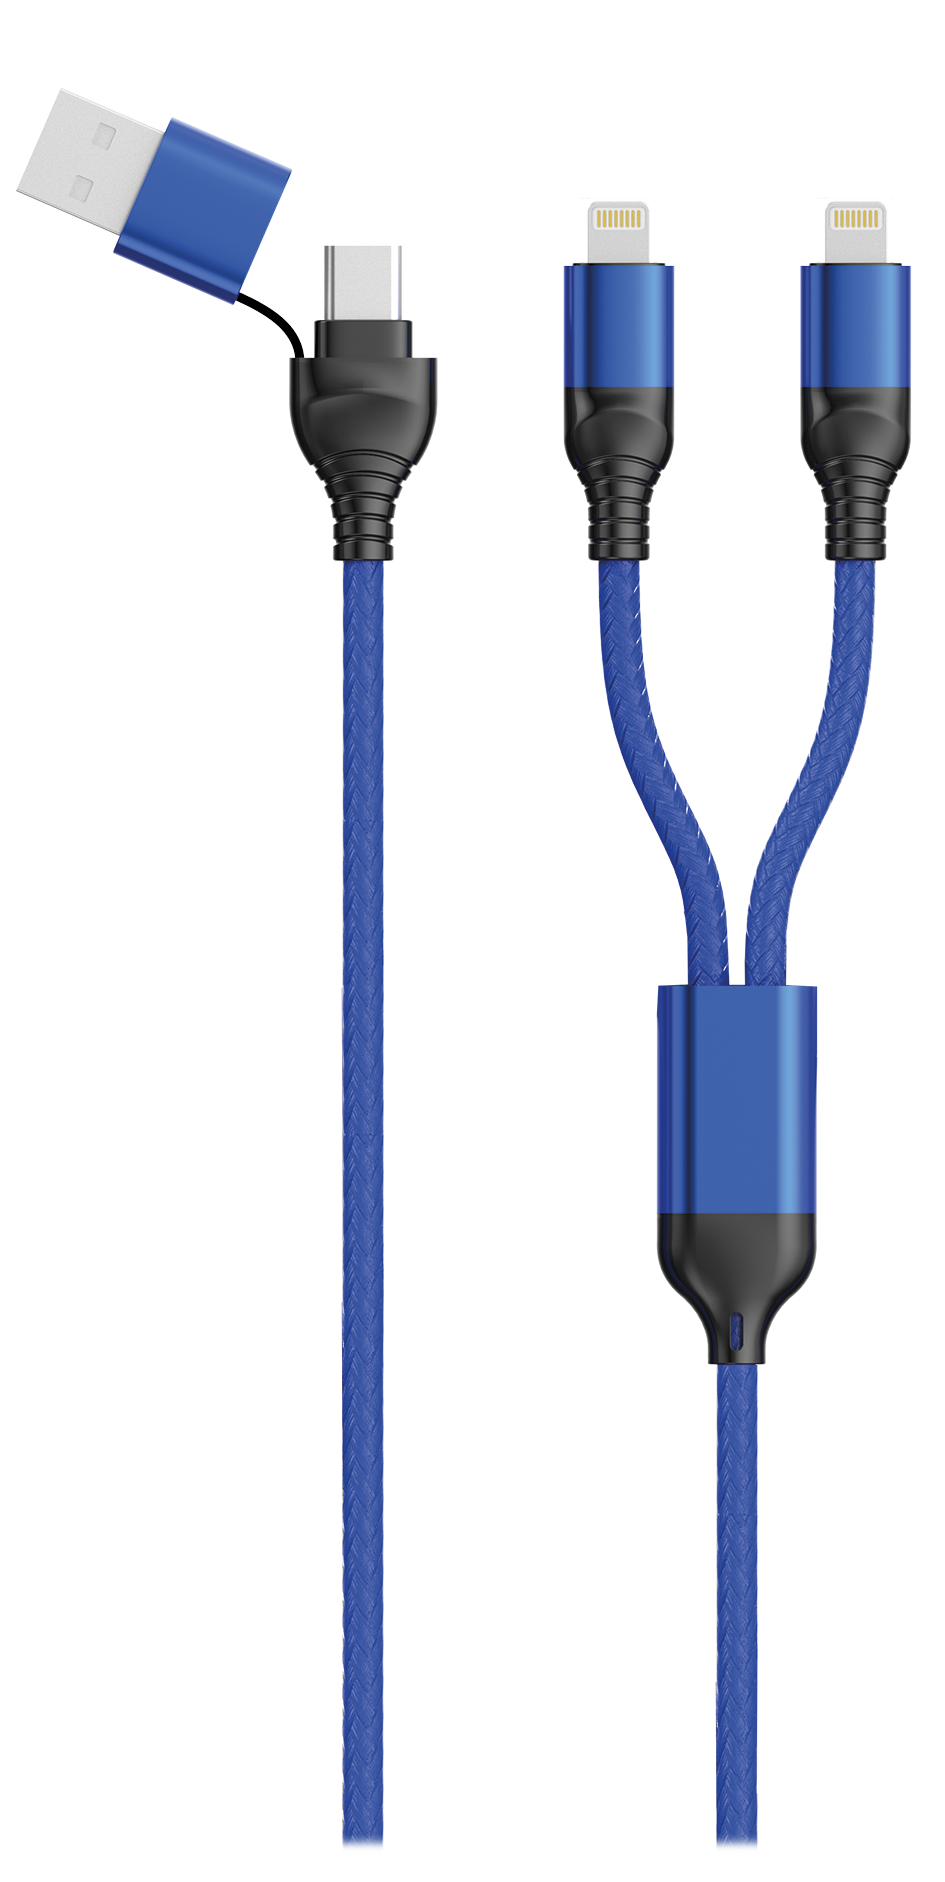 Bild von Duo USB / Type C Ladekabel Lightning blau 120cm